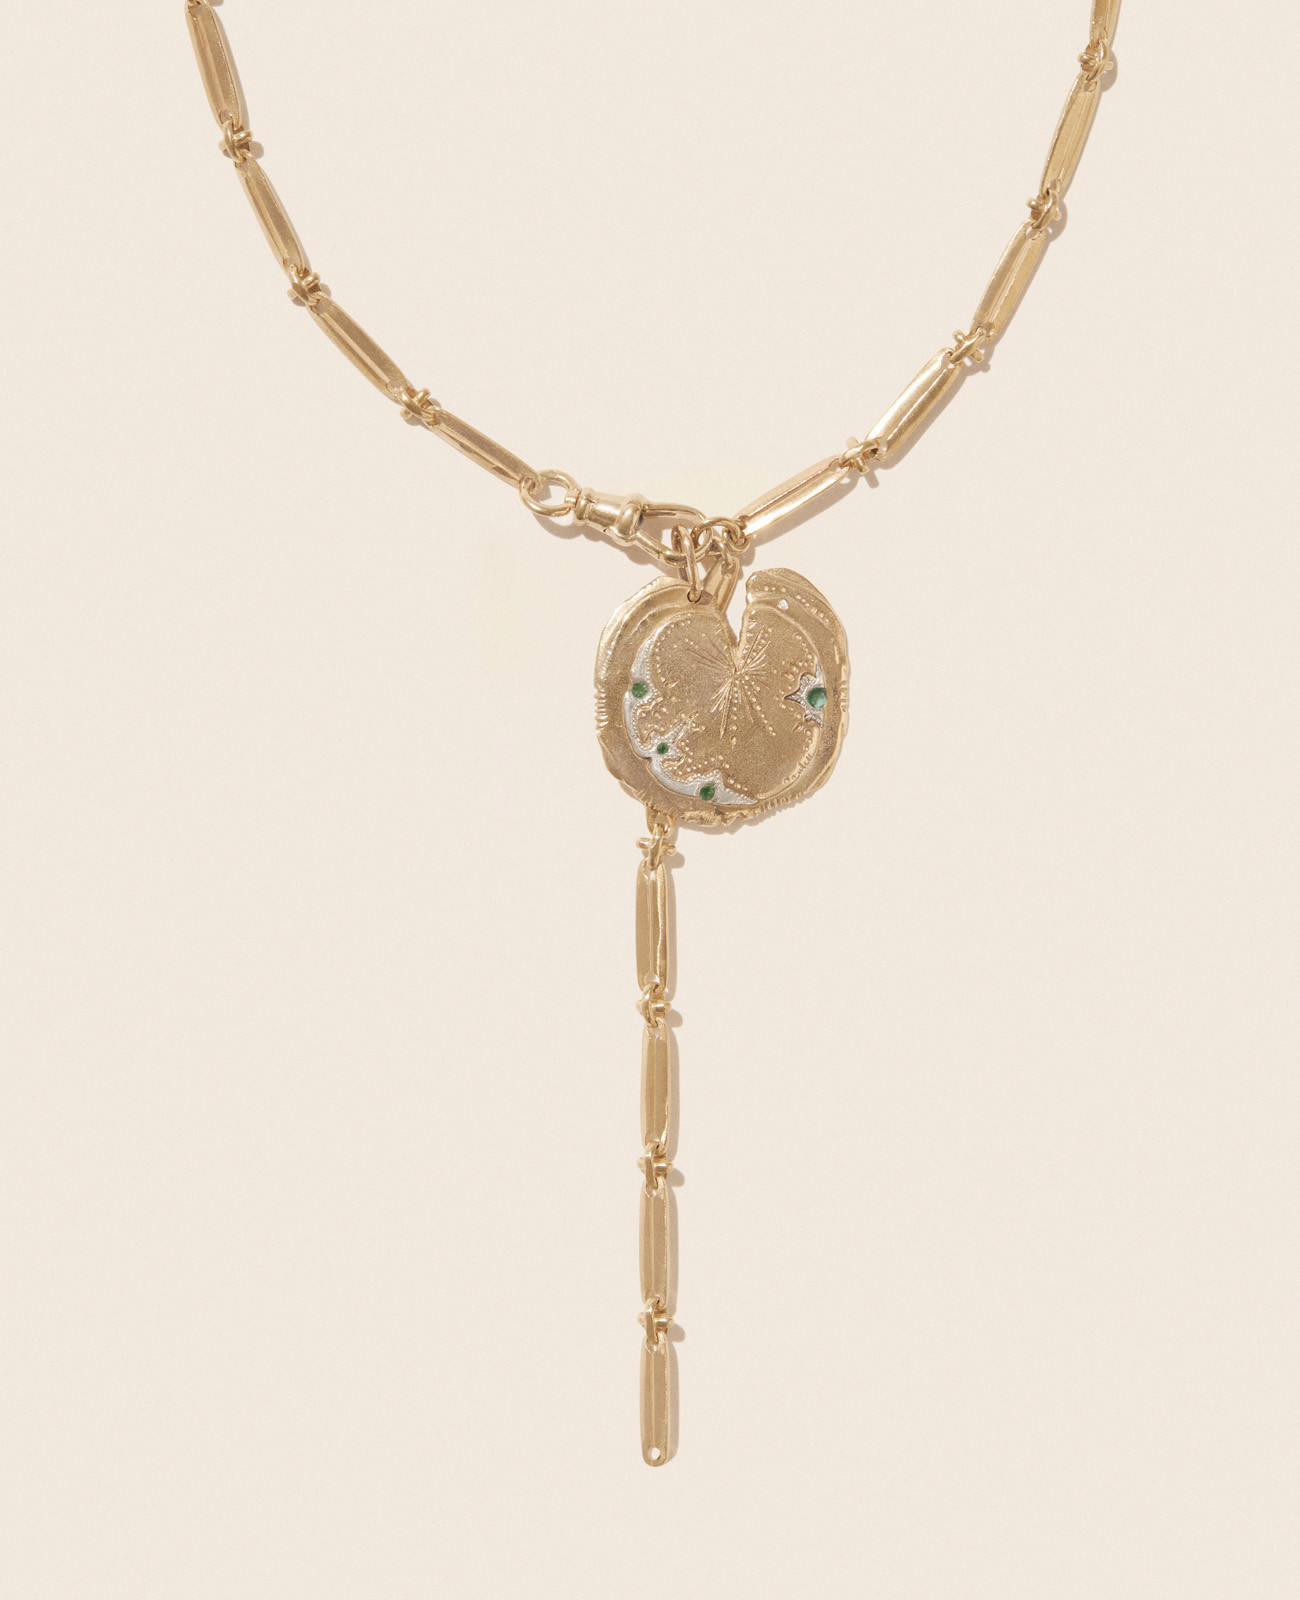 NICO N°1 necklace pascale monvoisin jewelry paris